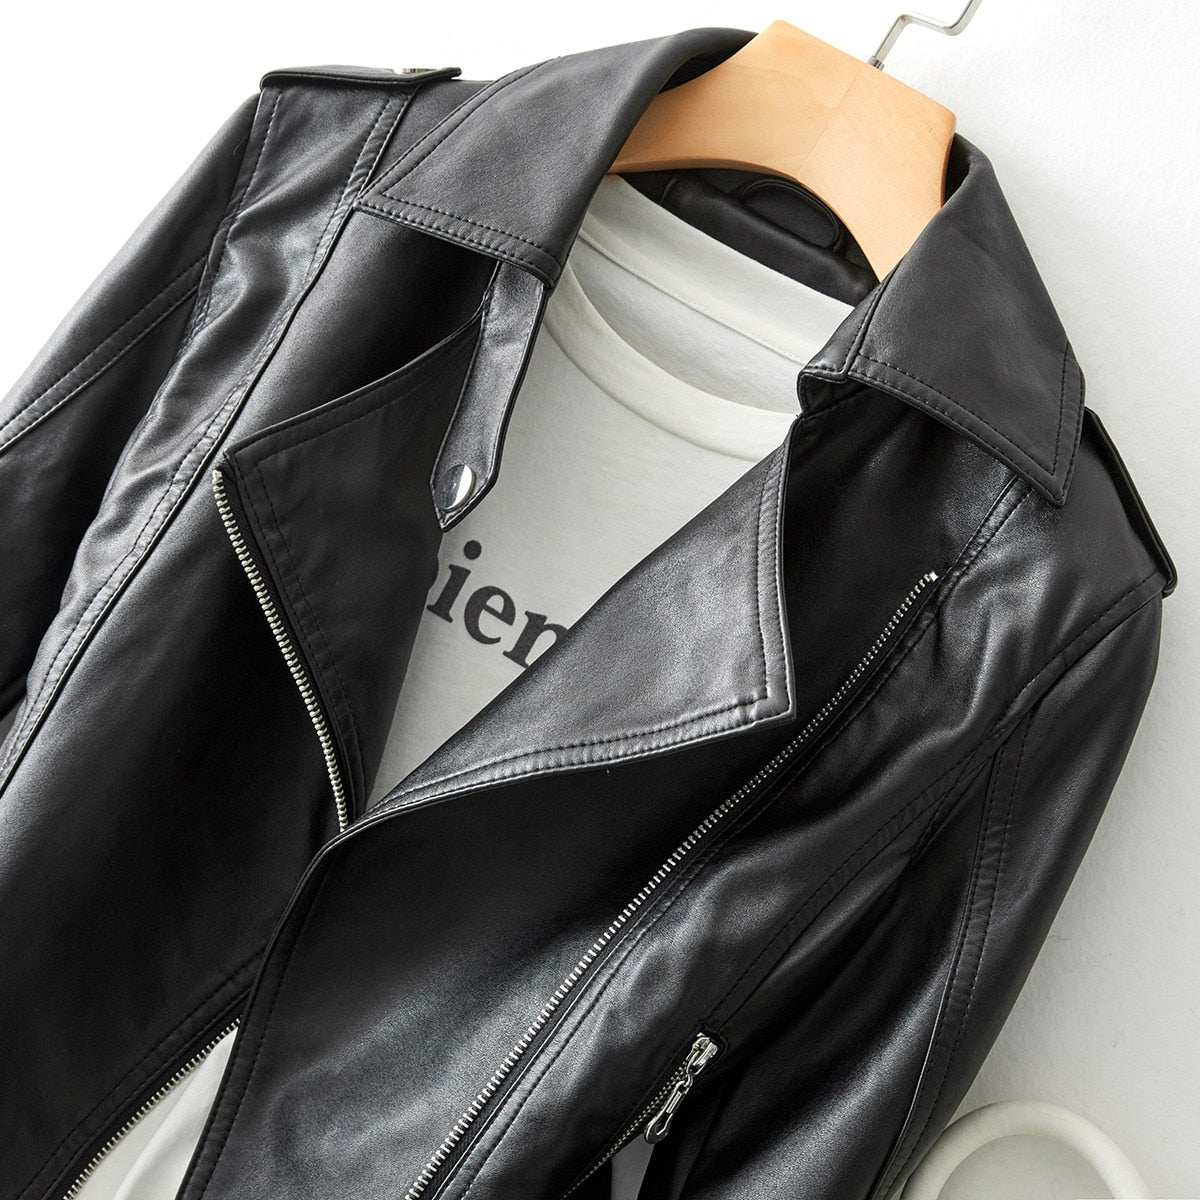 Marie-Caley Sleek Leather Jacket